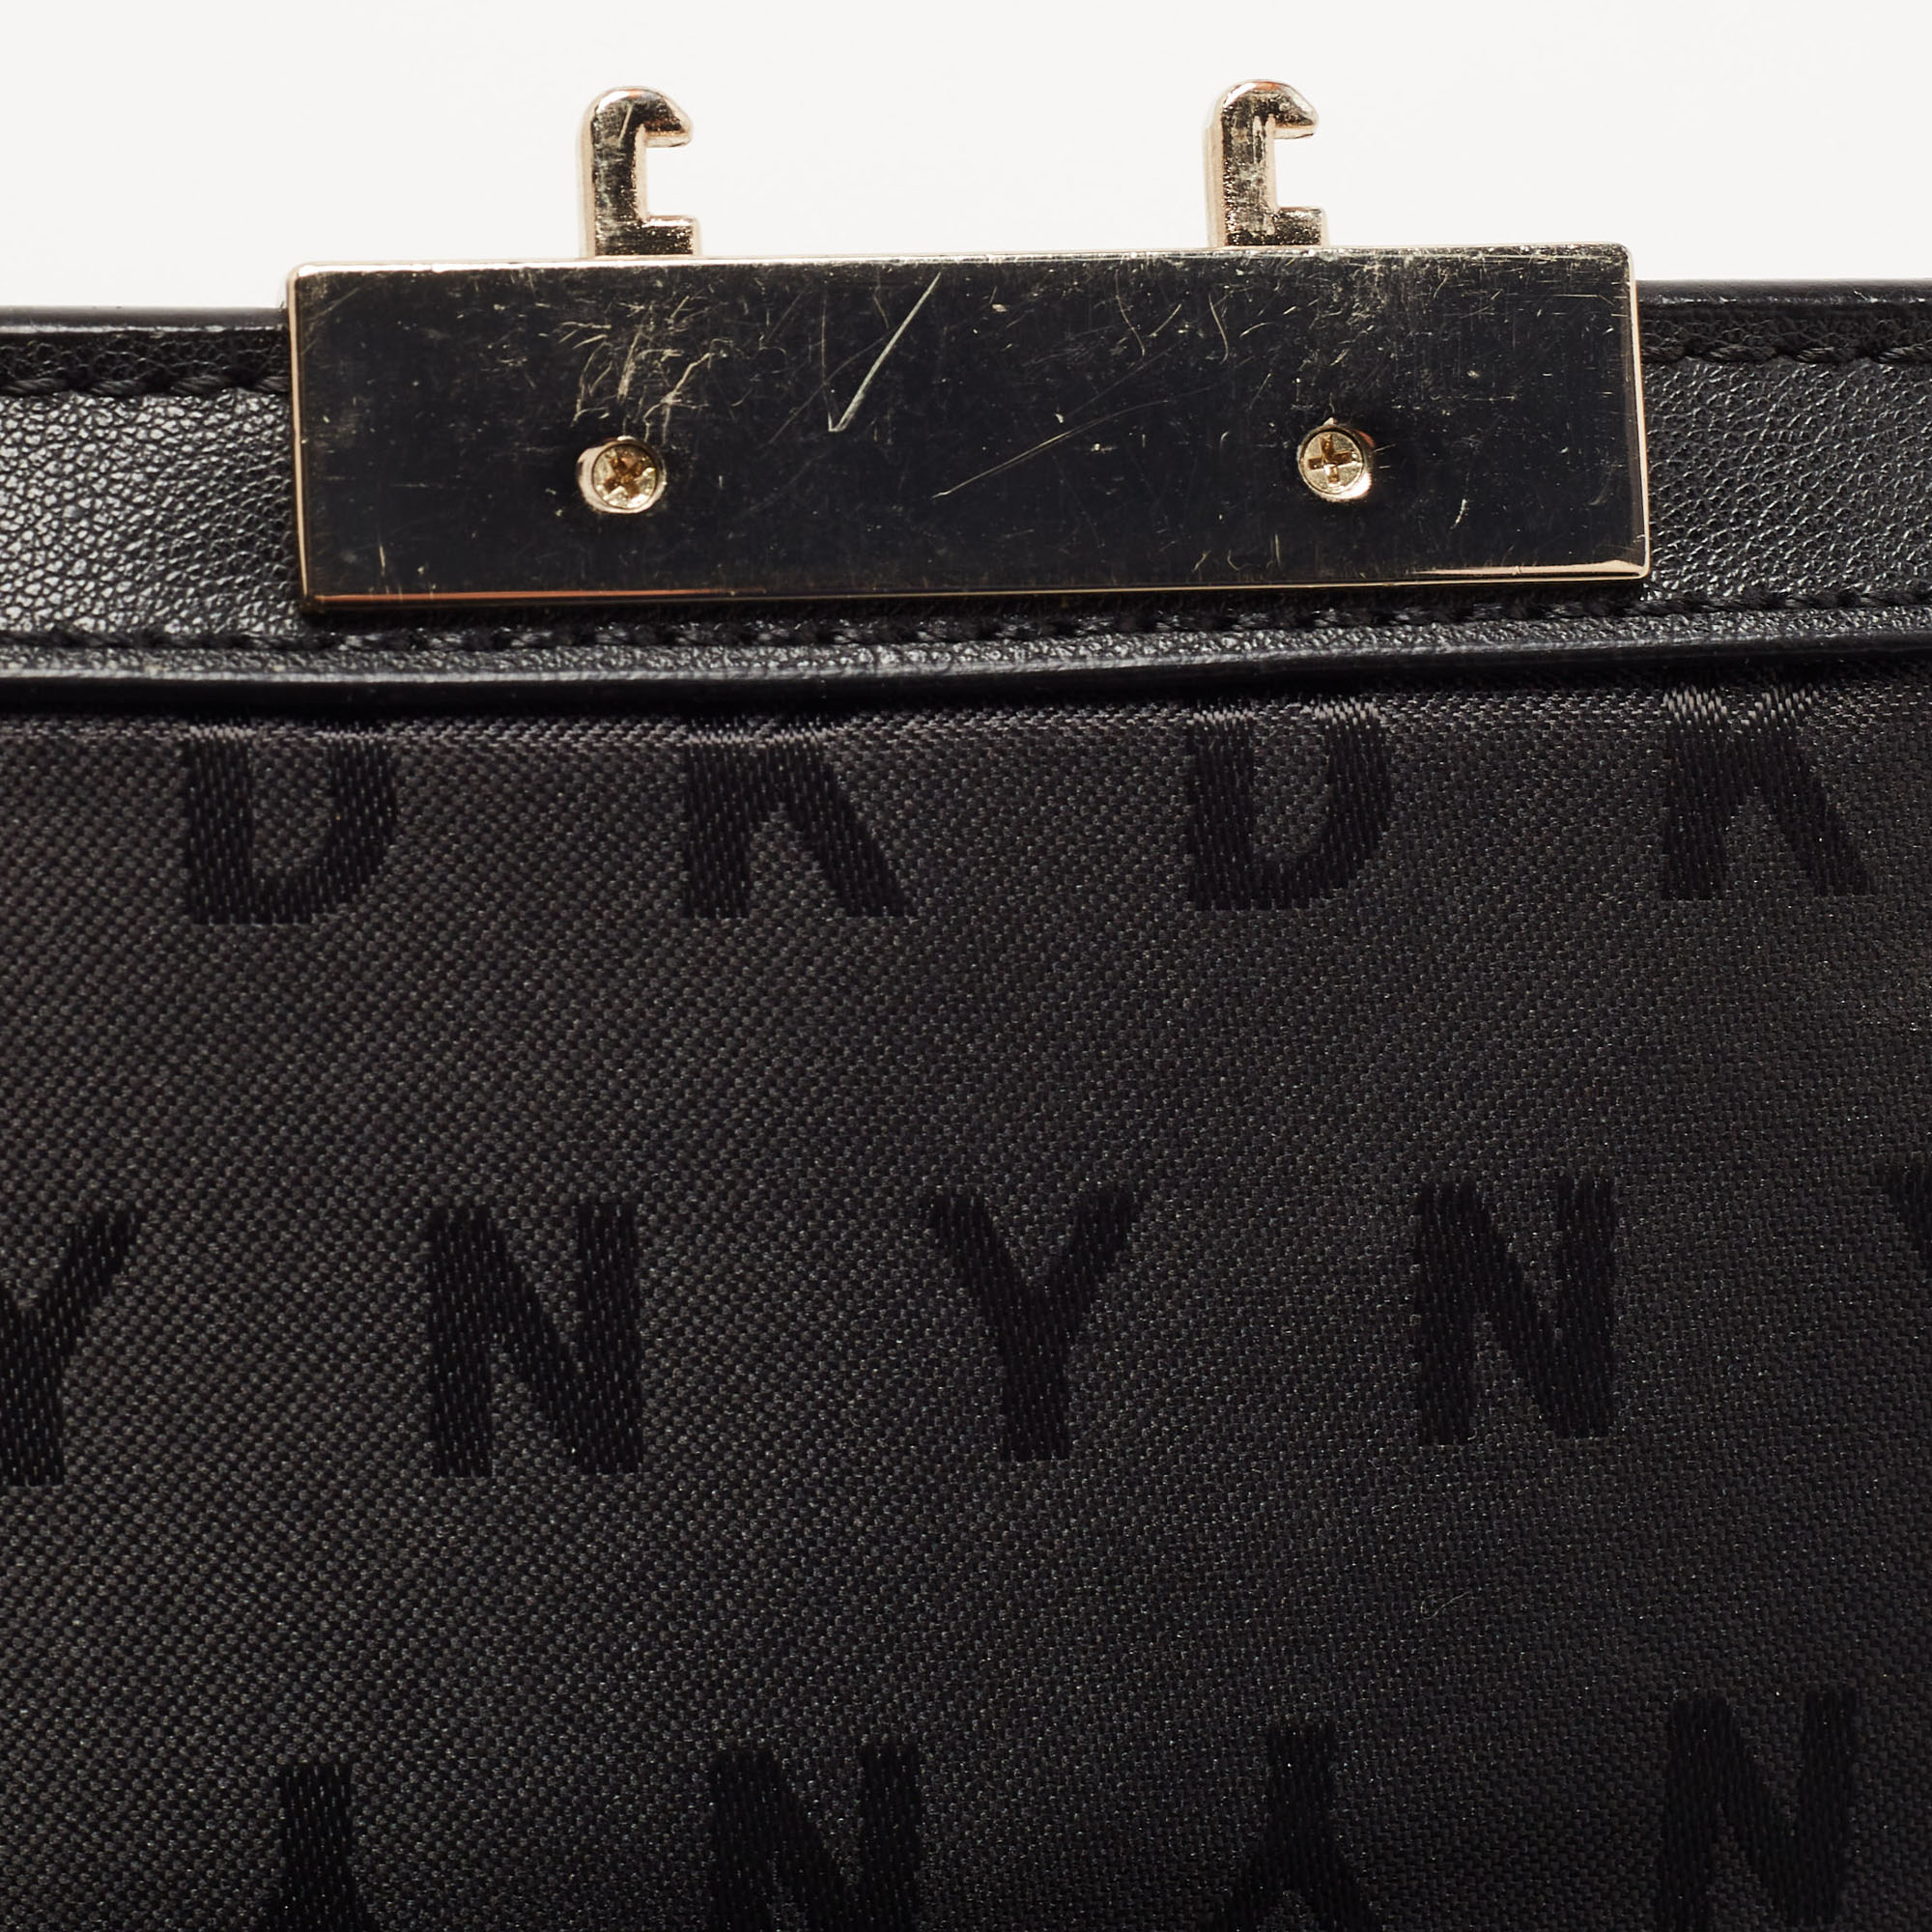 DKNY Black Leather Pushlock Flap Chain Crossbody Bag